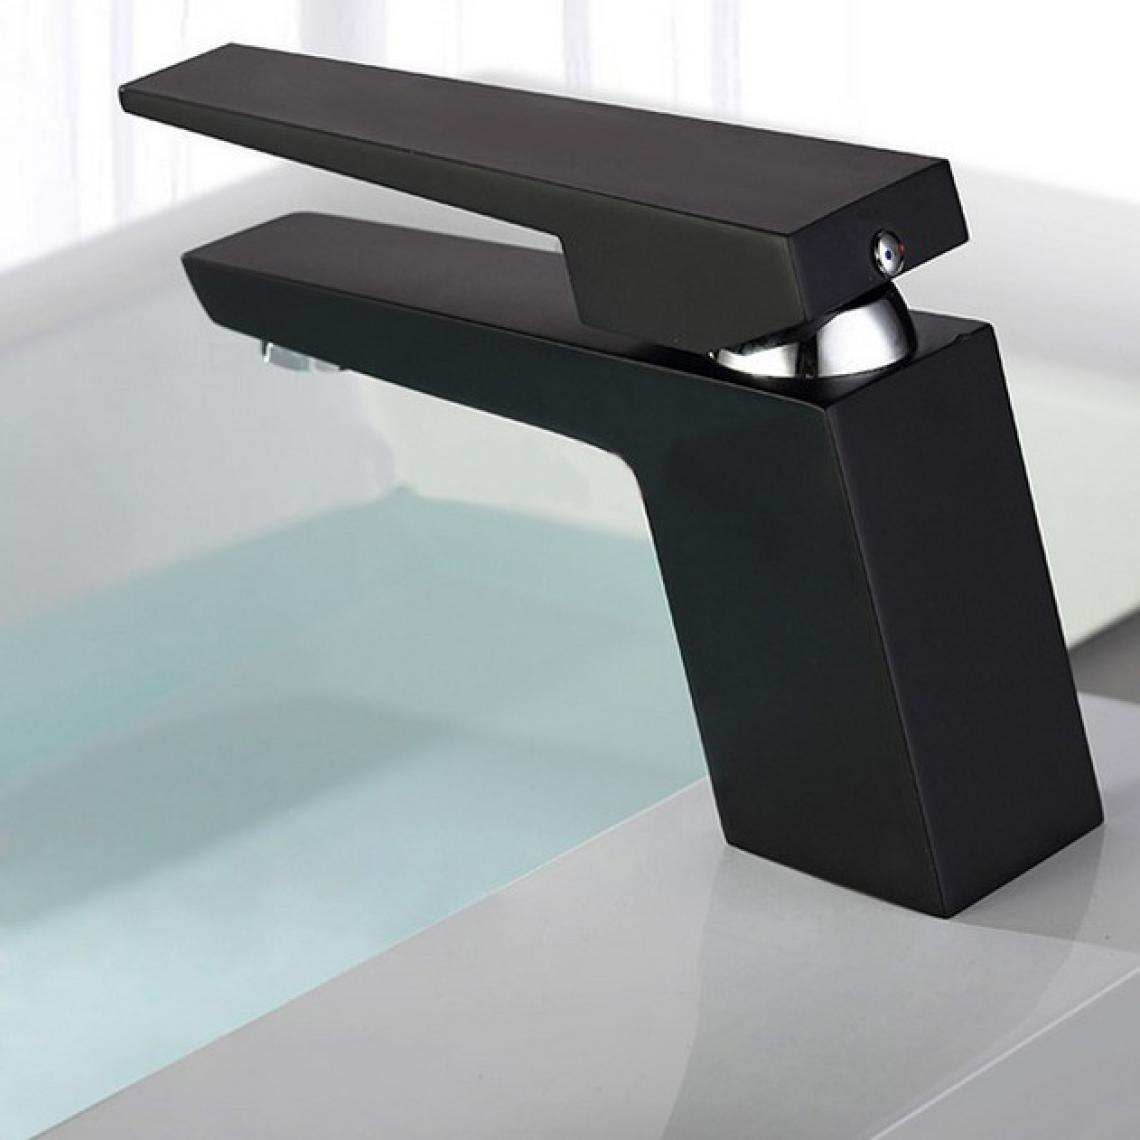 Kroos - Robinet lavabo mitigeur contemporain en laiton solide Noir - Robinet de lavabo